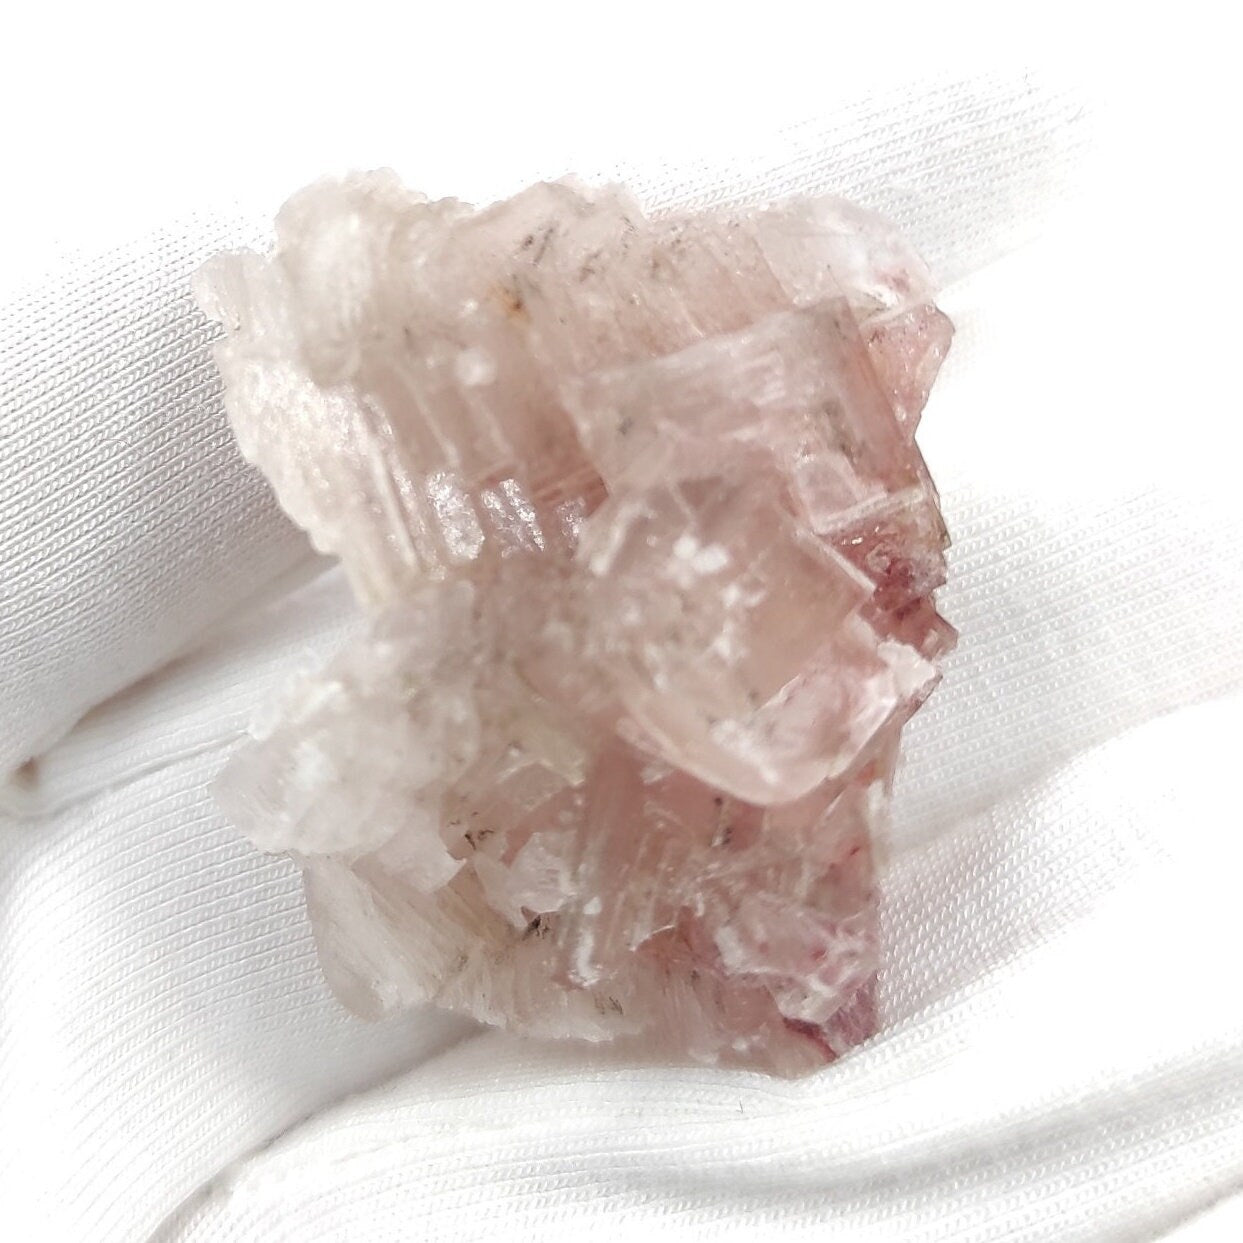 11g Pink Halite Salt Crystal from Searles Lake, Trona, California - Natural Pink Salt Crystal Specimen - Rare Halite Salt Mineral - Mini Gem